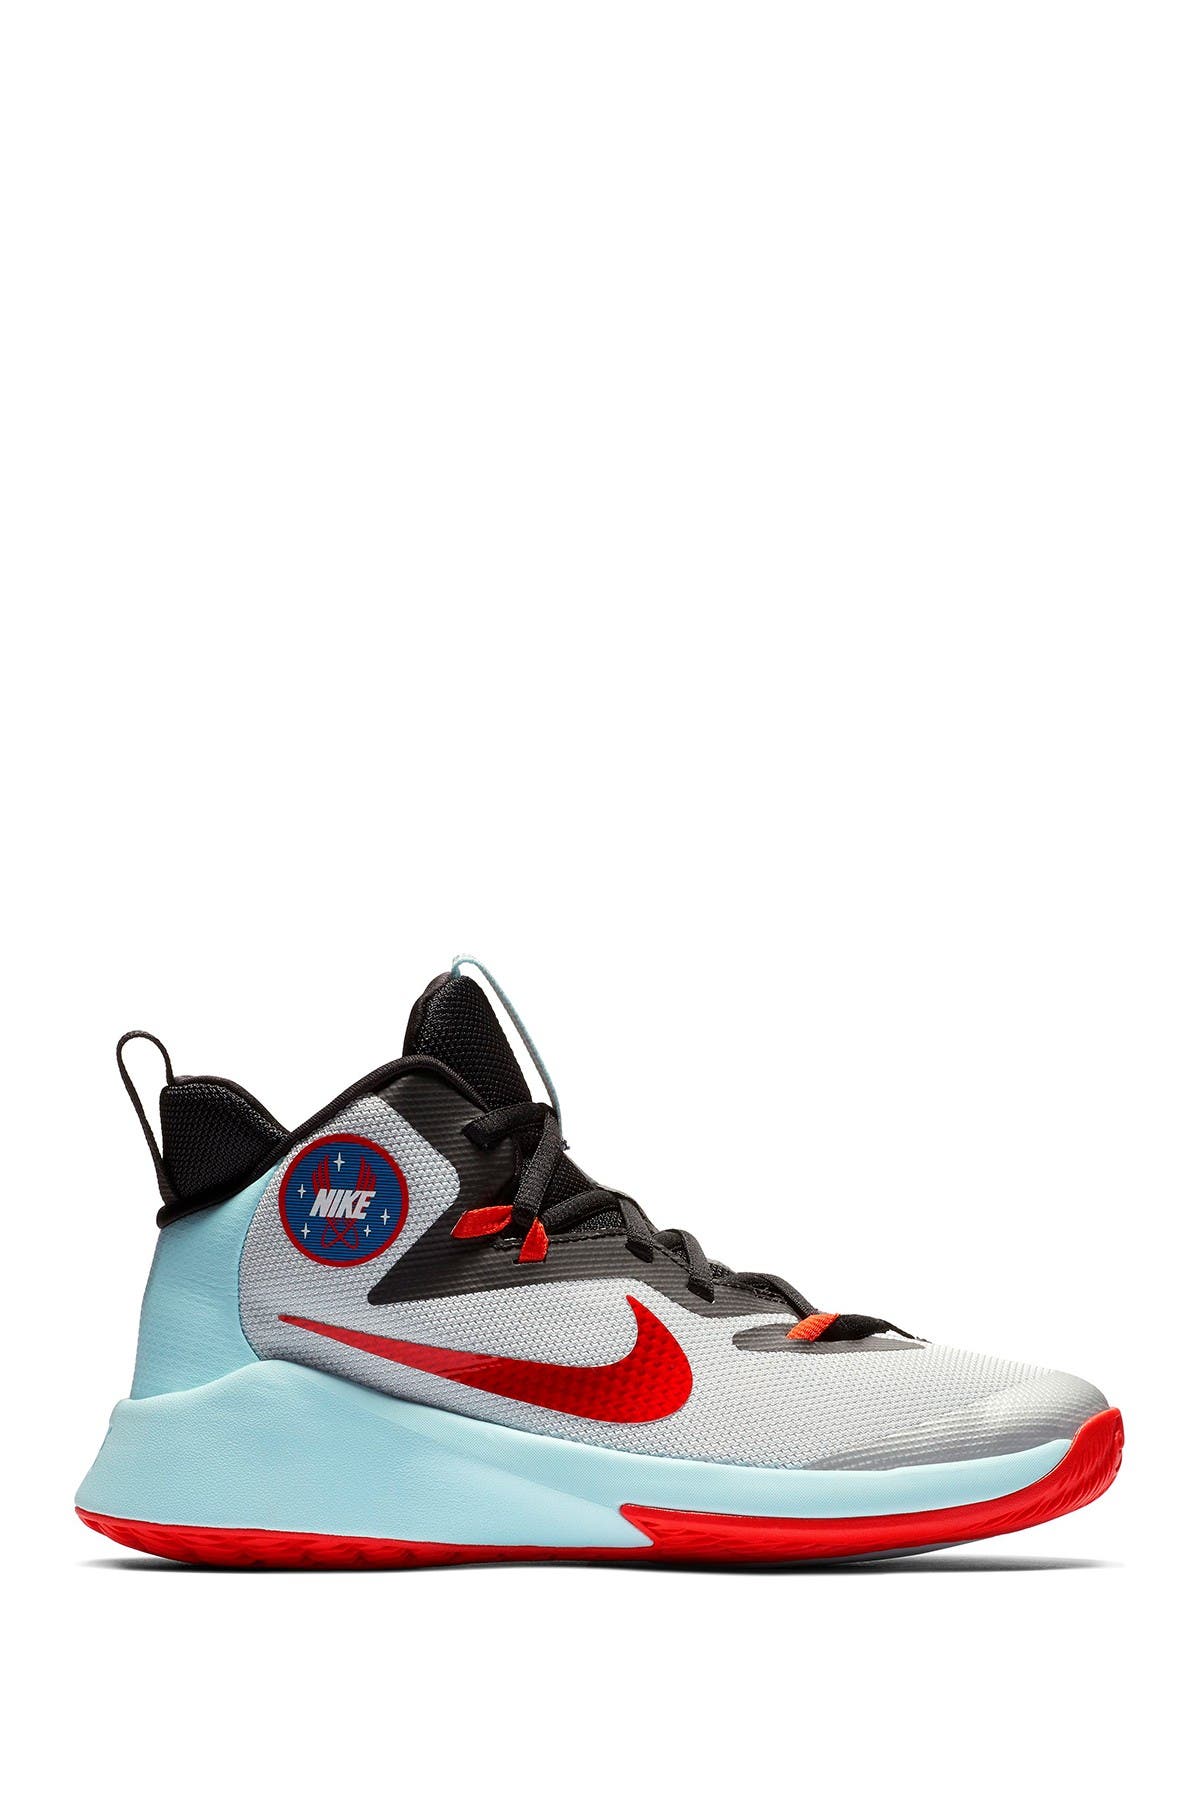 Nike | Future Court SD Basketball Shoe 